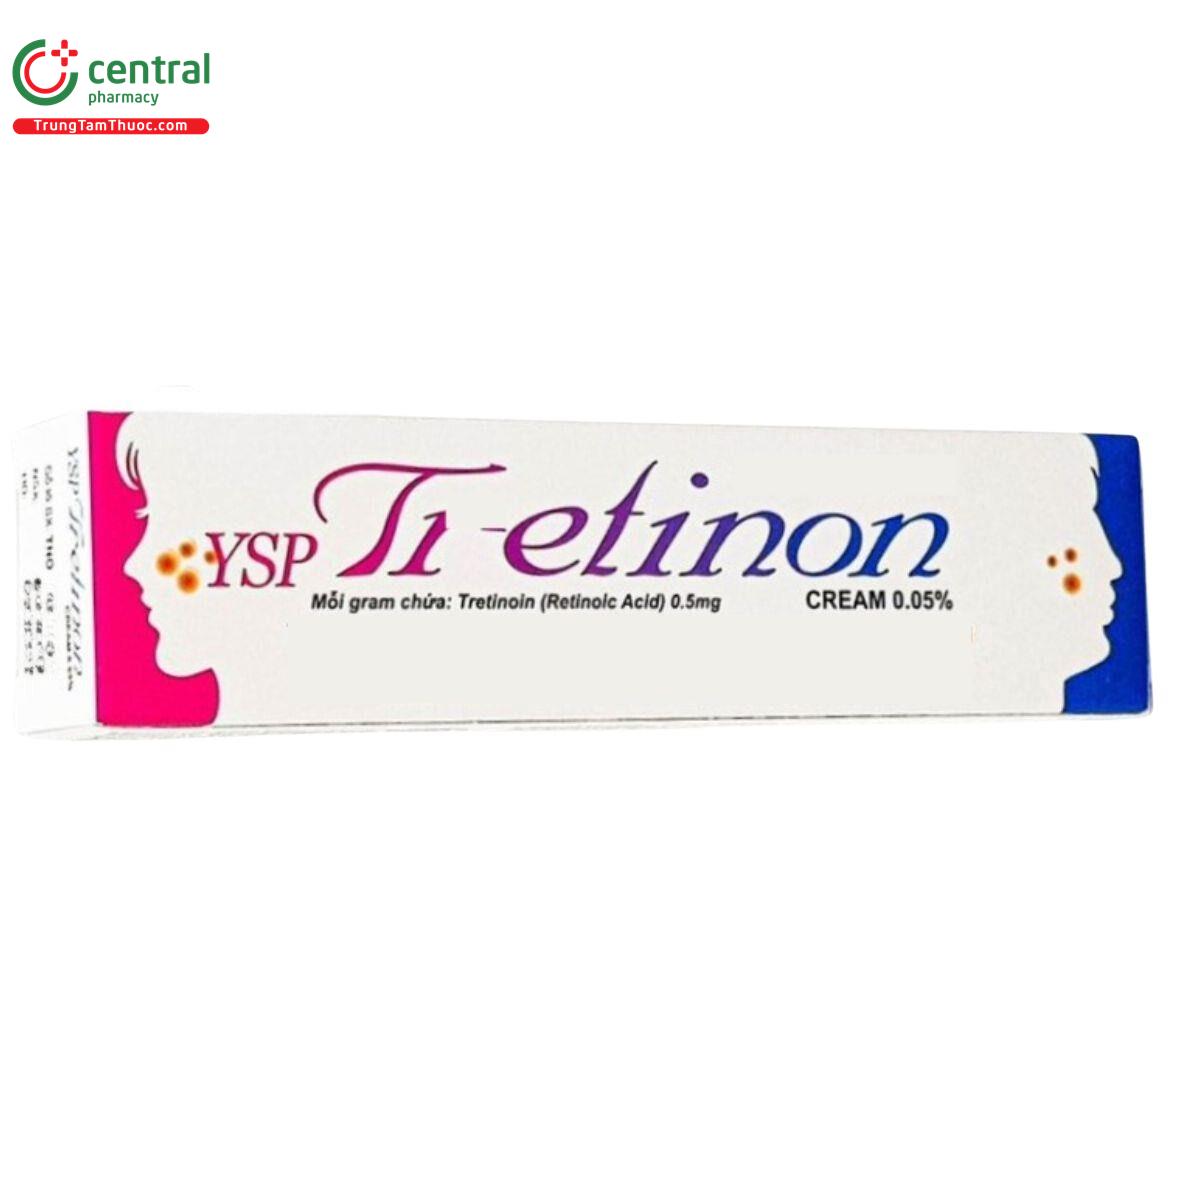 ysptretinon cream 0 05 02 L4683